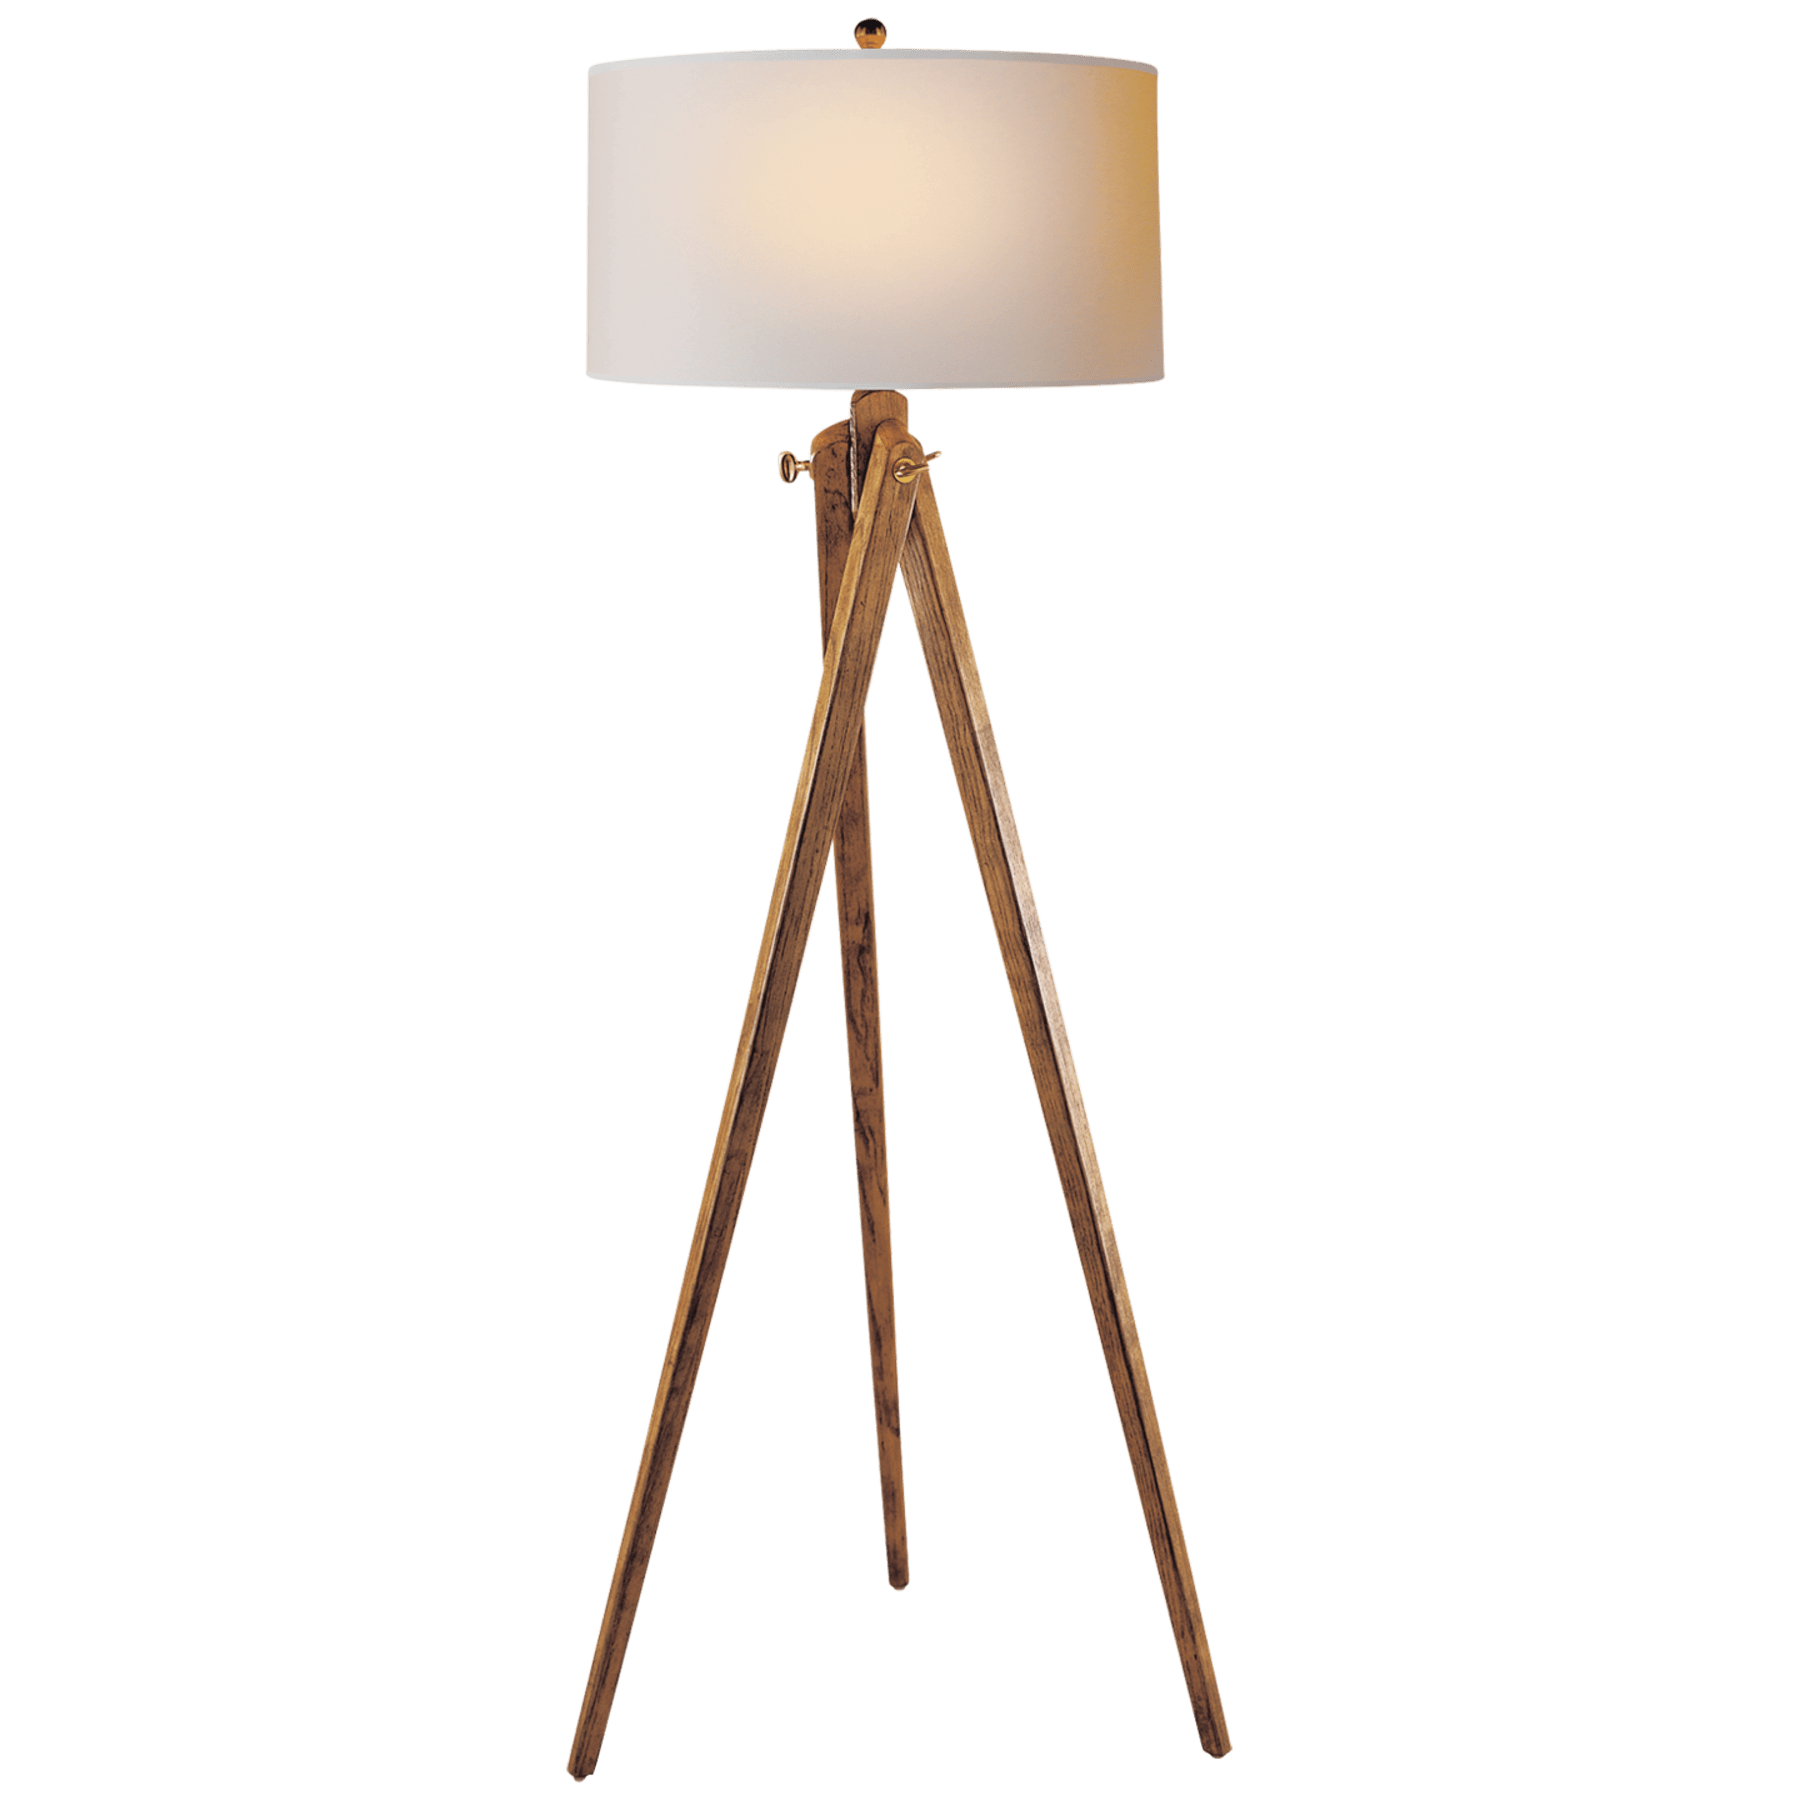 Gold Floor Lamp PNG